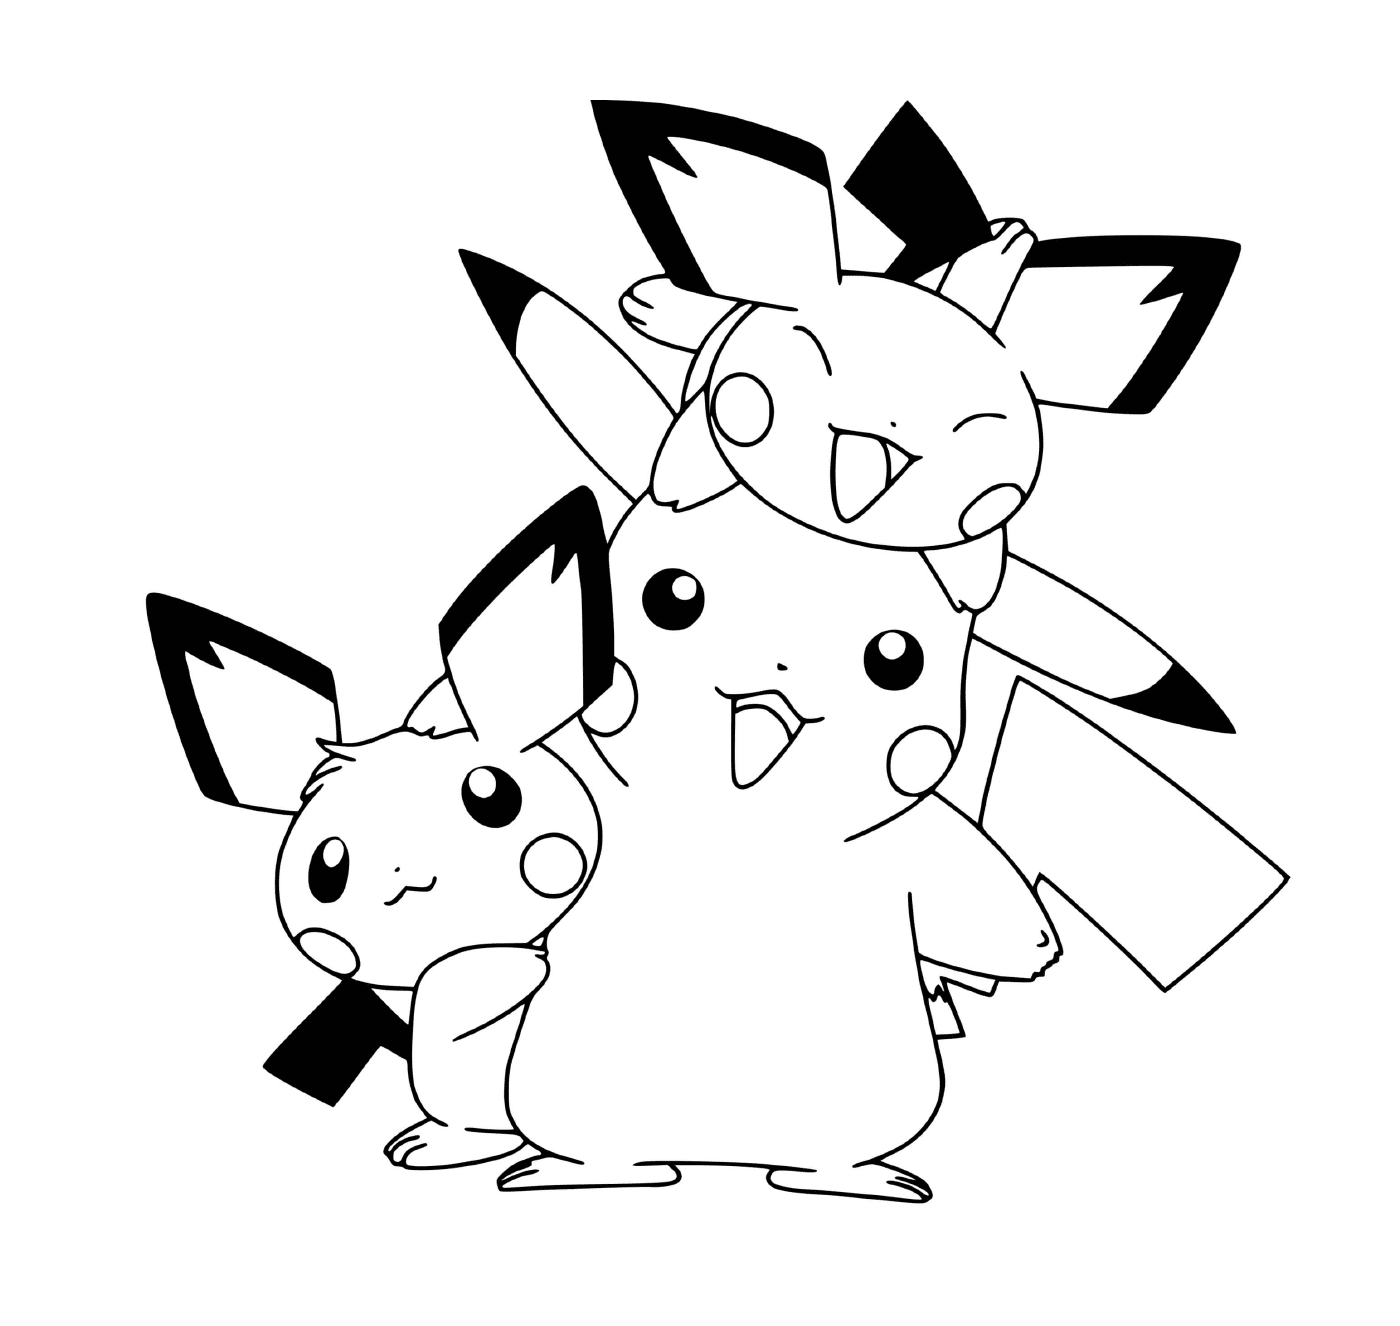  Pikachu bonito com seus primos Pikachus para colorir 